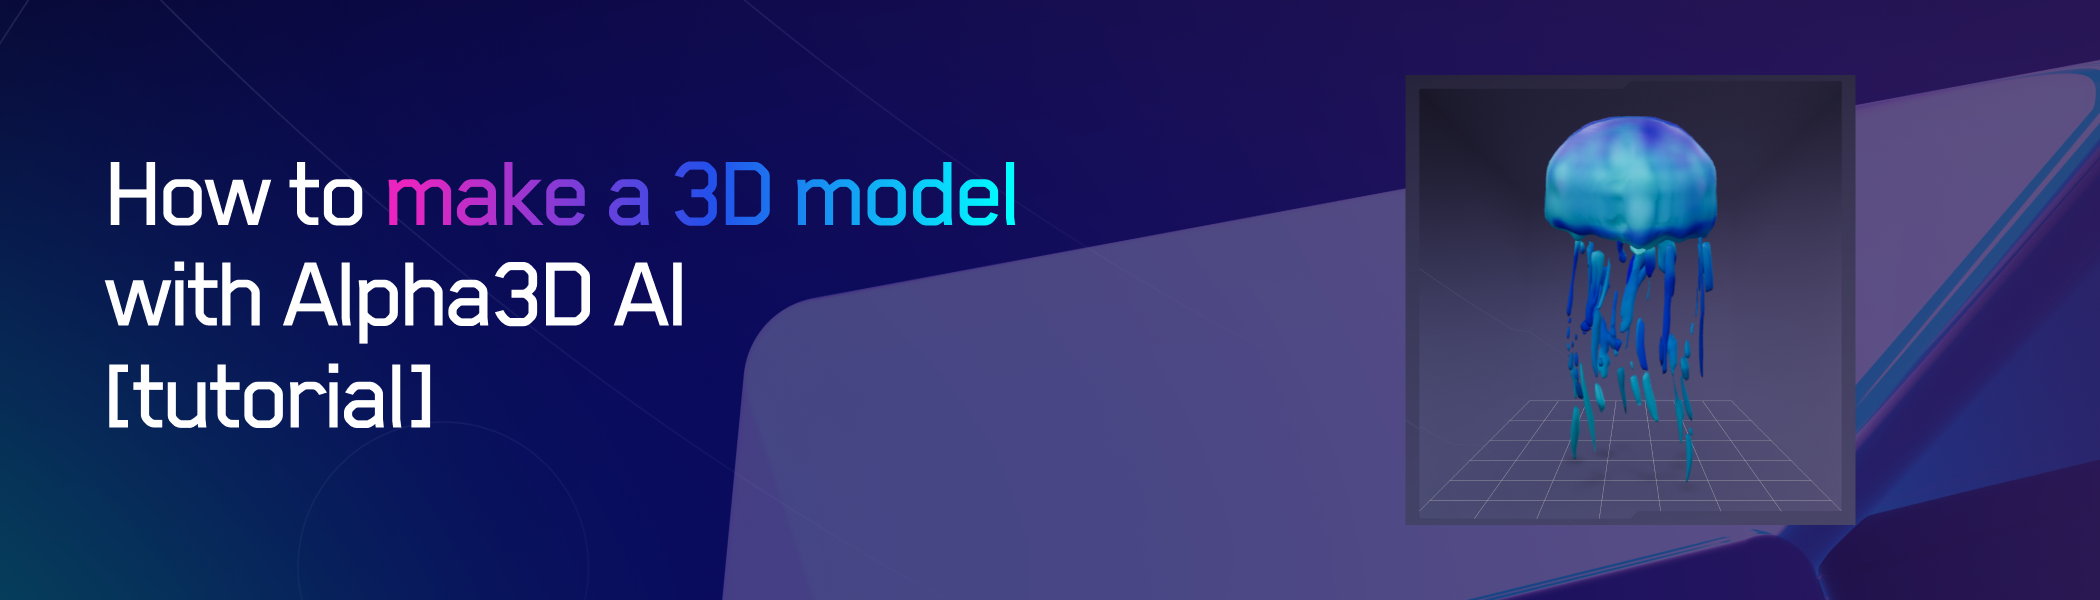 how to make a 3d model header